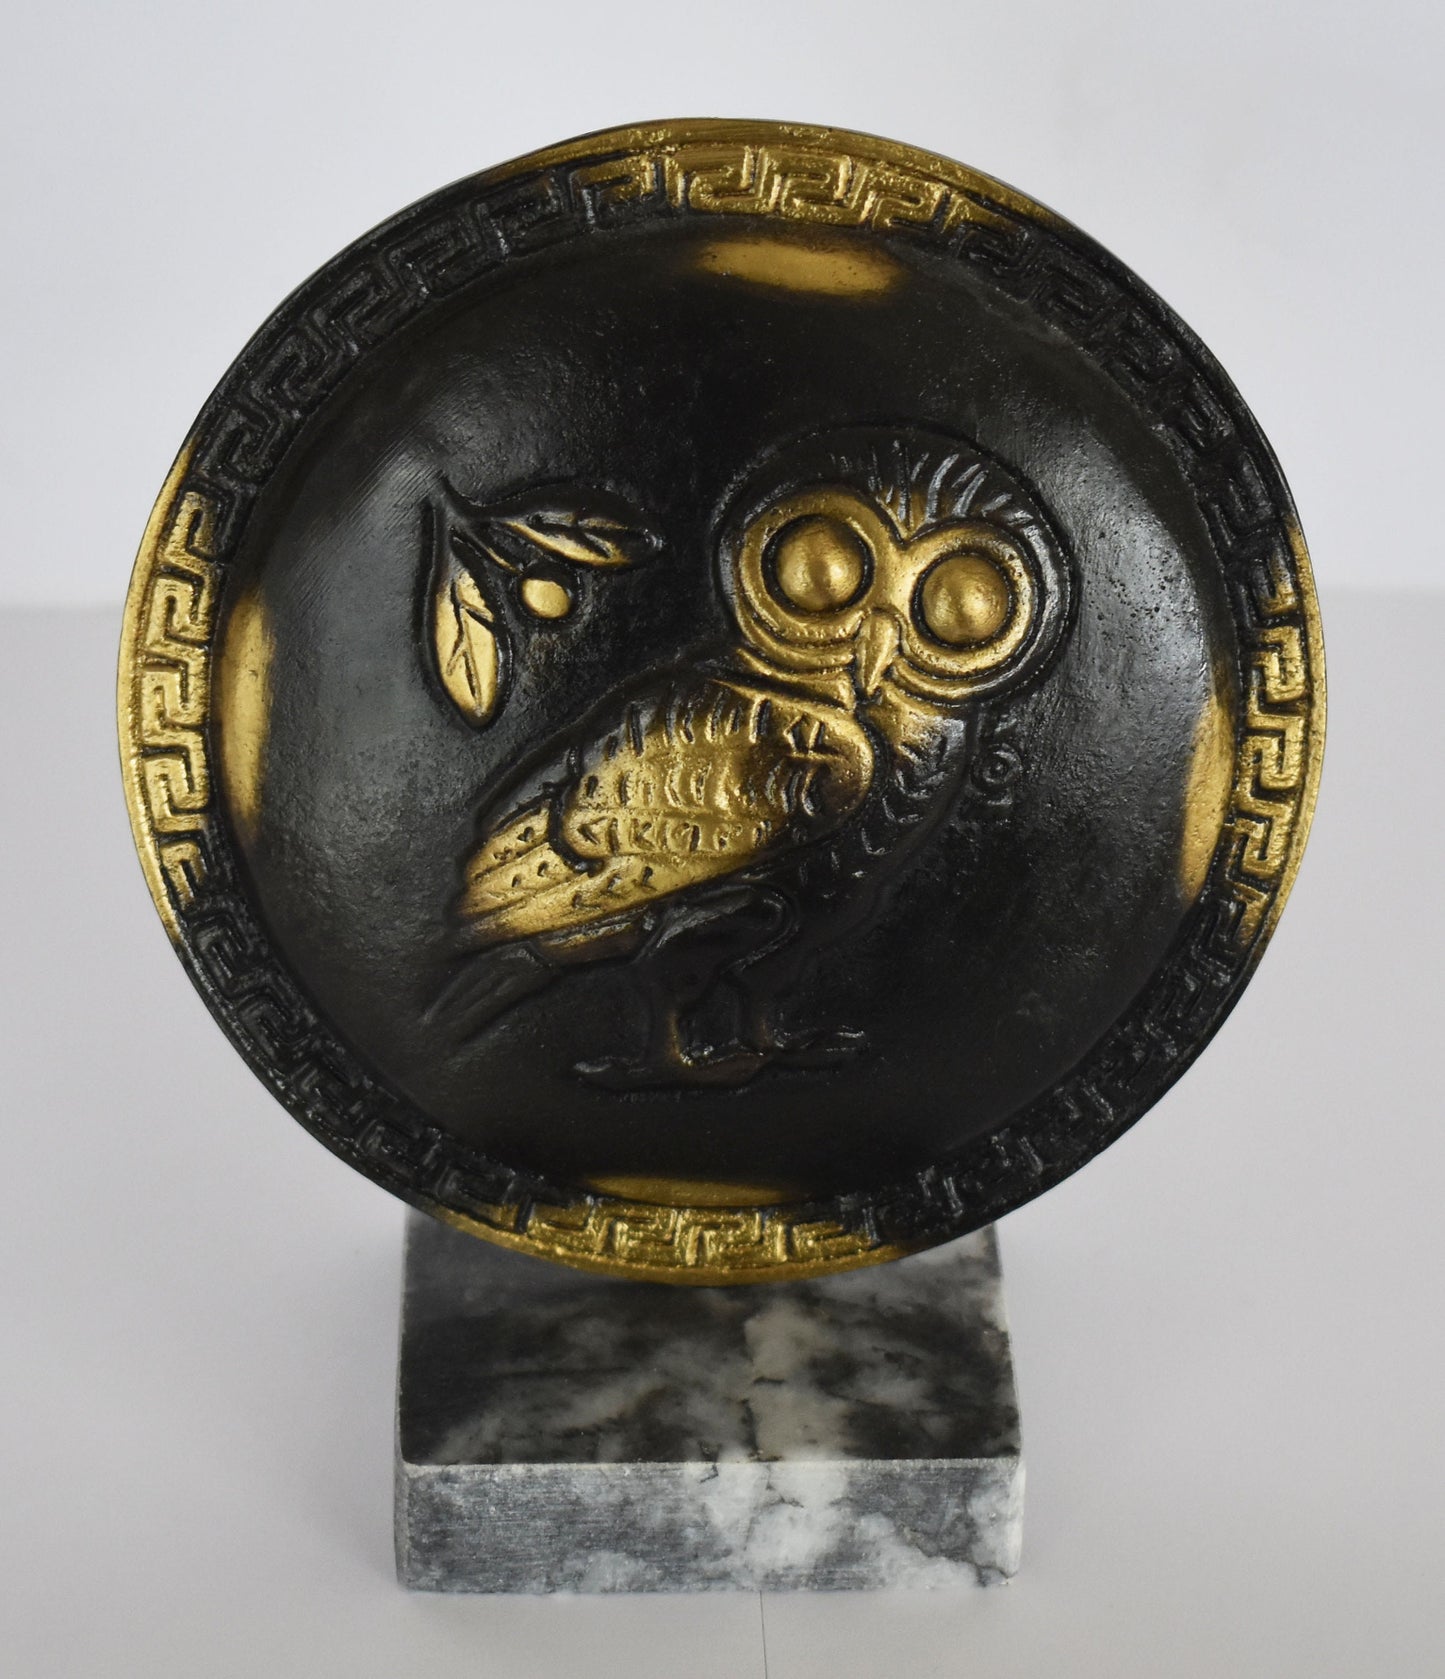 Ancient Greek Athenian Shield - Owl symbol - Meander Design - marble base - Museum Replica - pure Bronze Sculpture